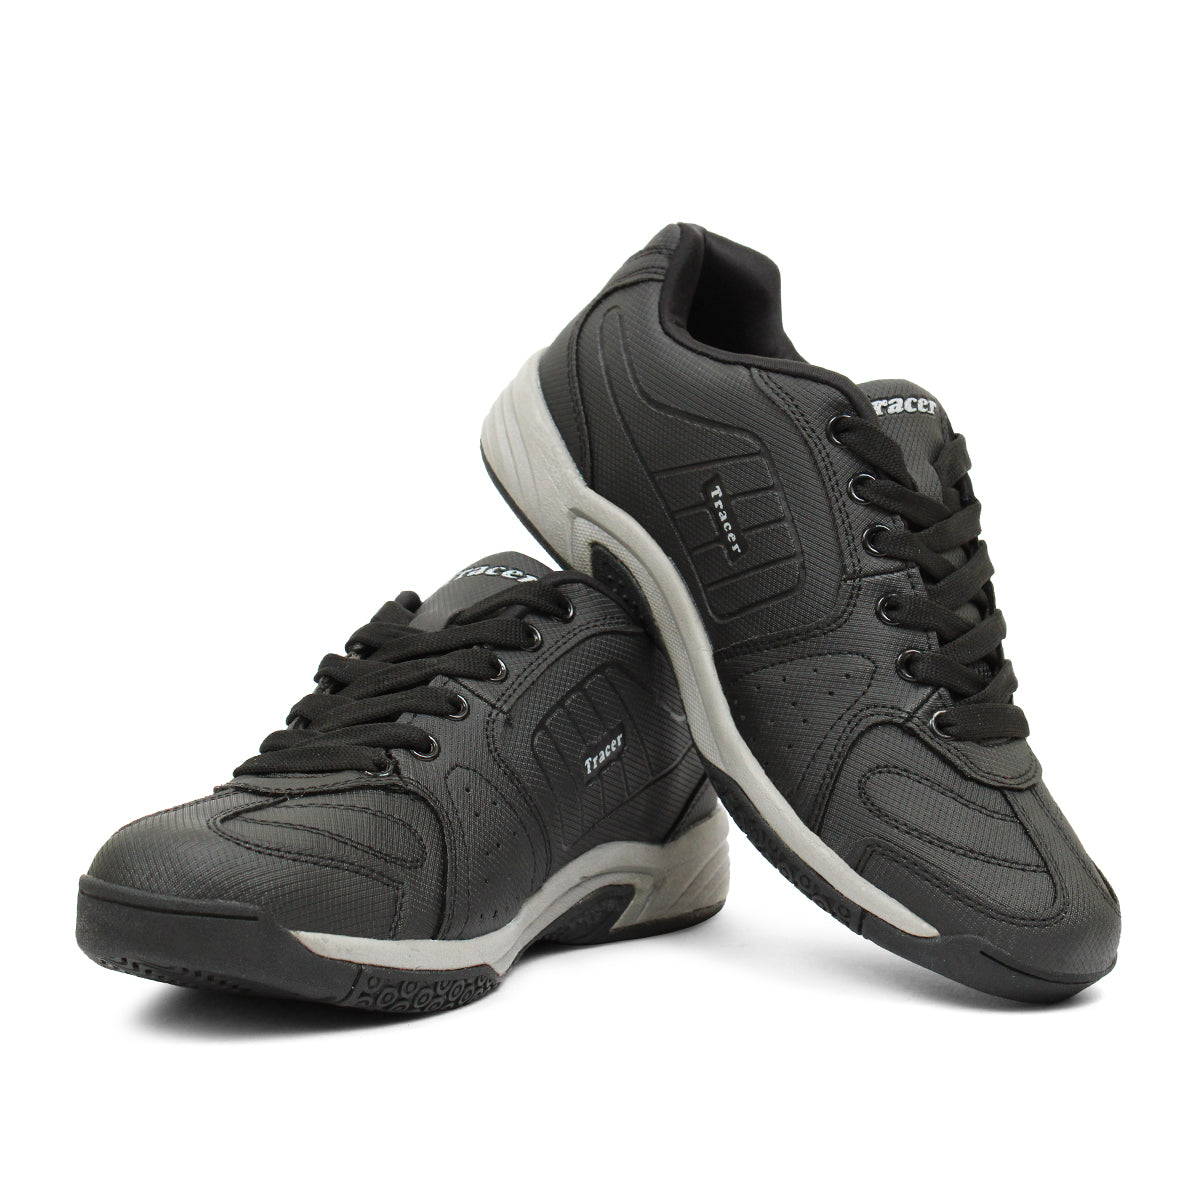 Tennis Shoes for Men Black Grey